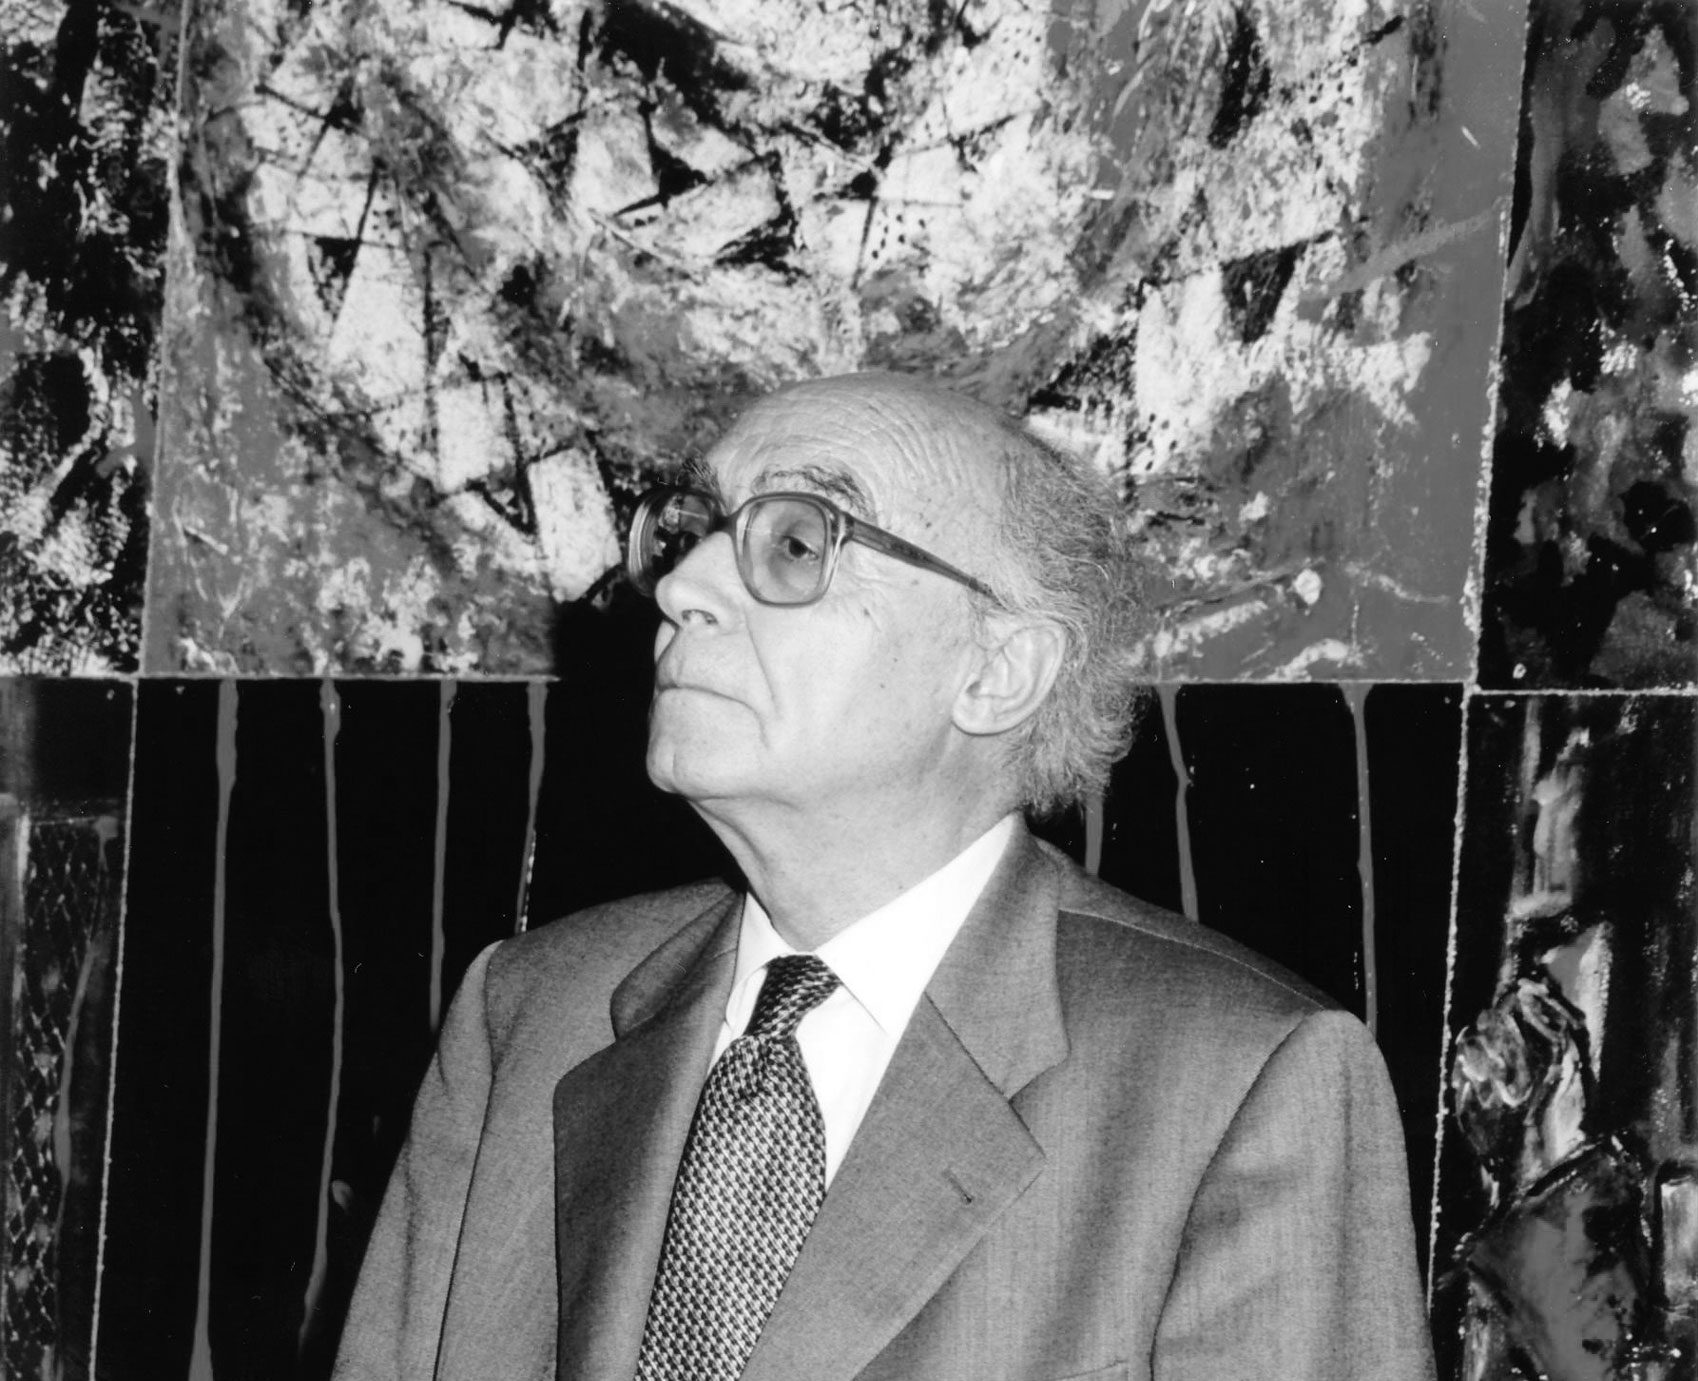  José Saramago